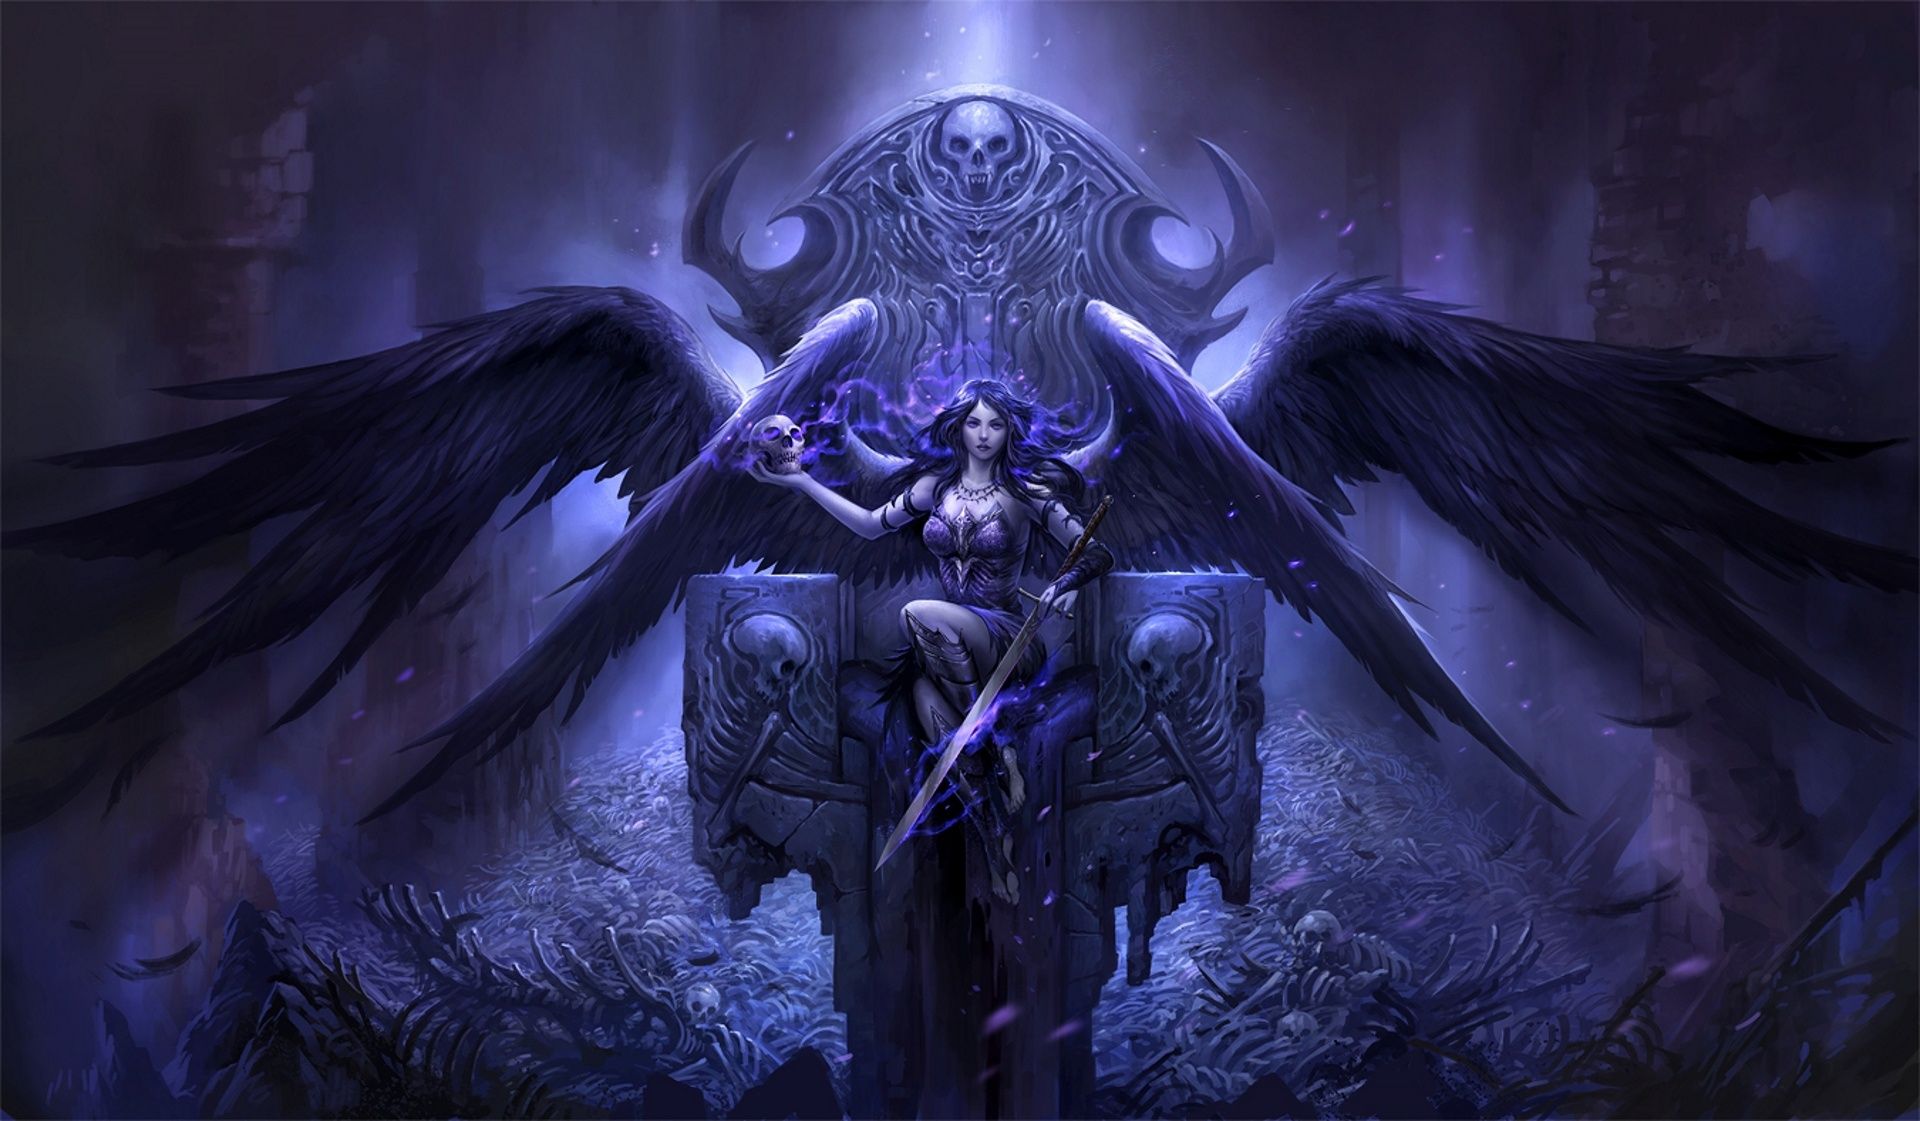 Gothic Angel Warrior Sitting on Throne Computer Wallpaper, Desktop Backgroundx1121. Angel art, Black angels, Angel warrior